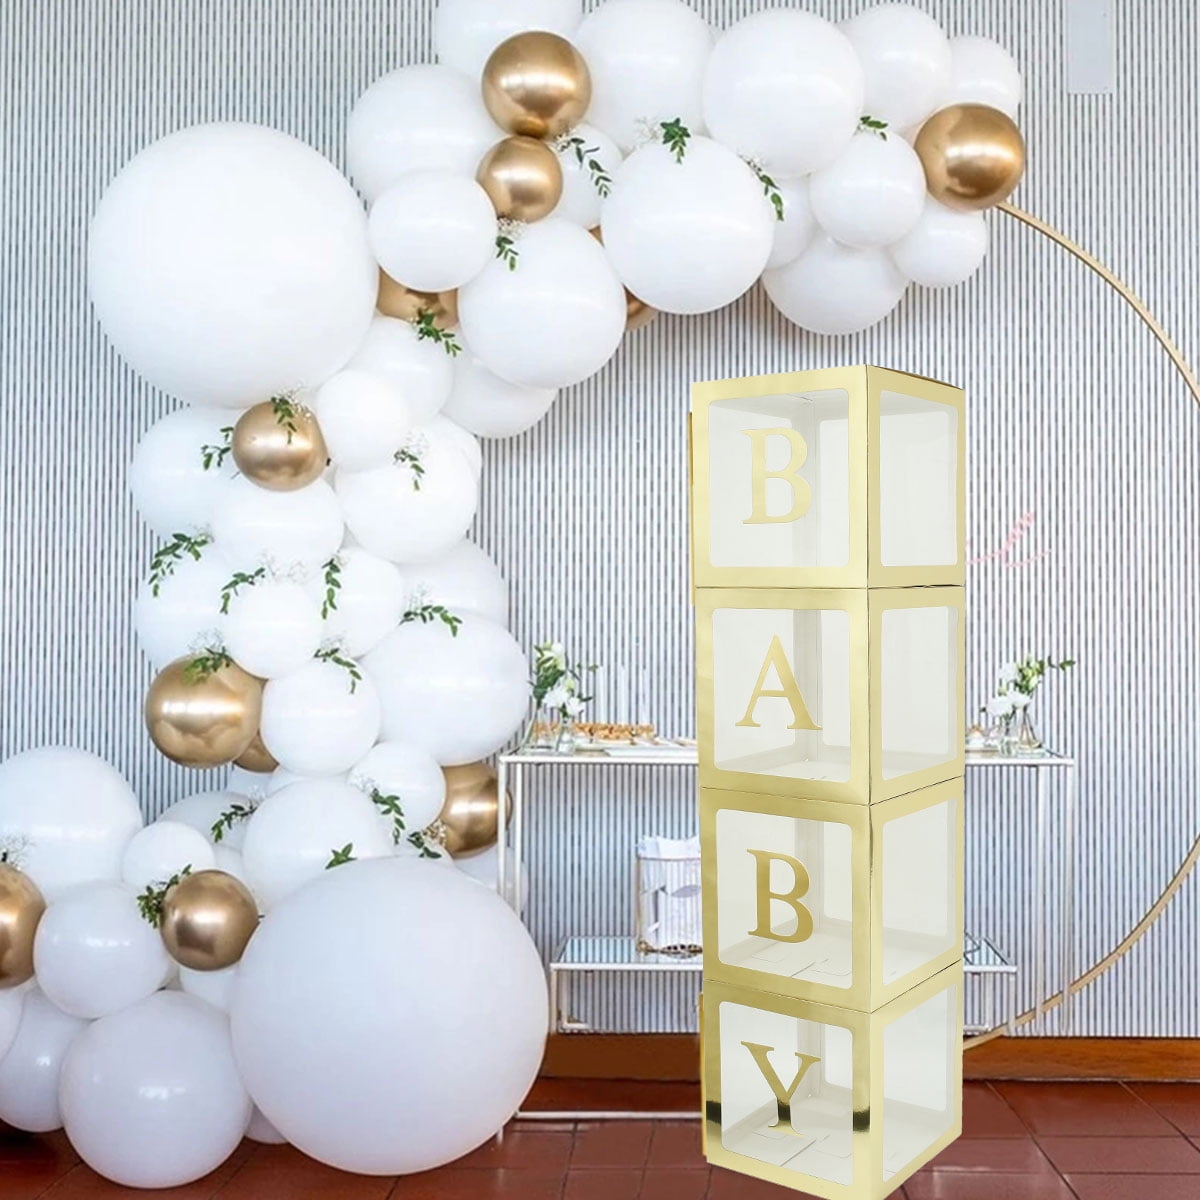  Hcomine Wayfun Baby Shower Decorations Box Kit - 4Pcs